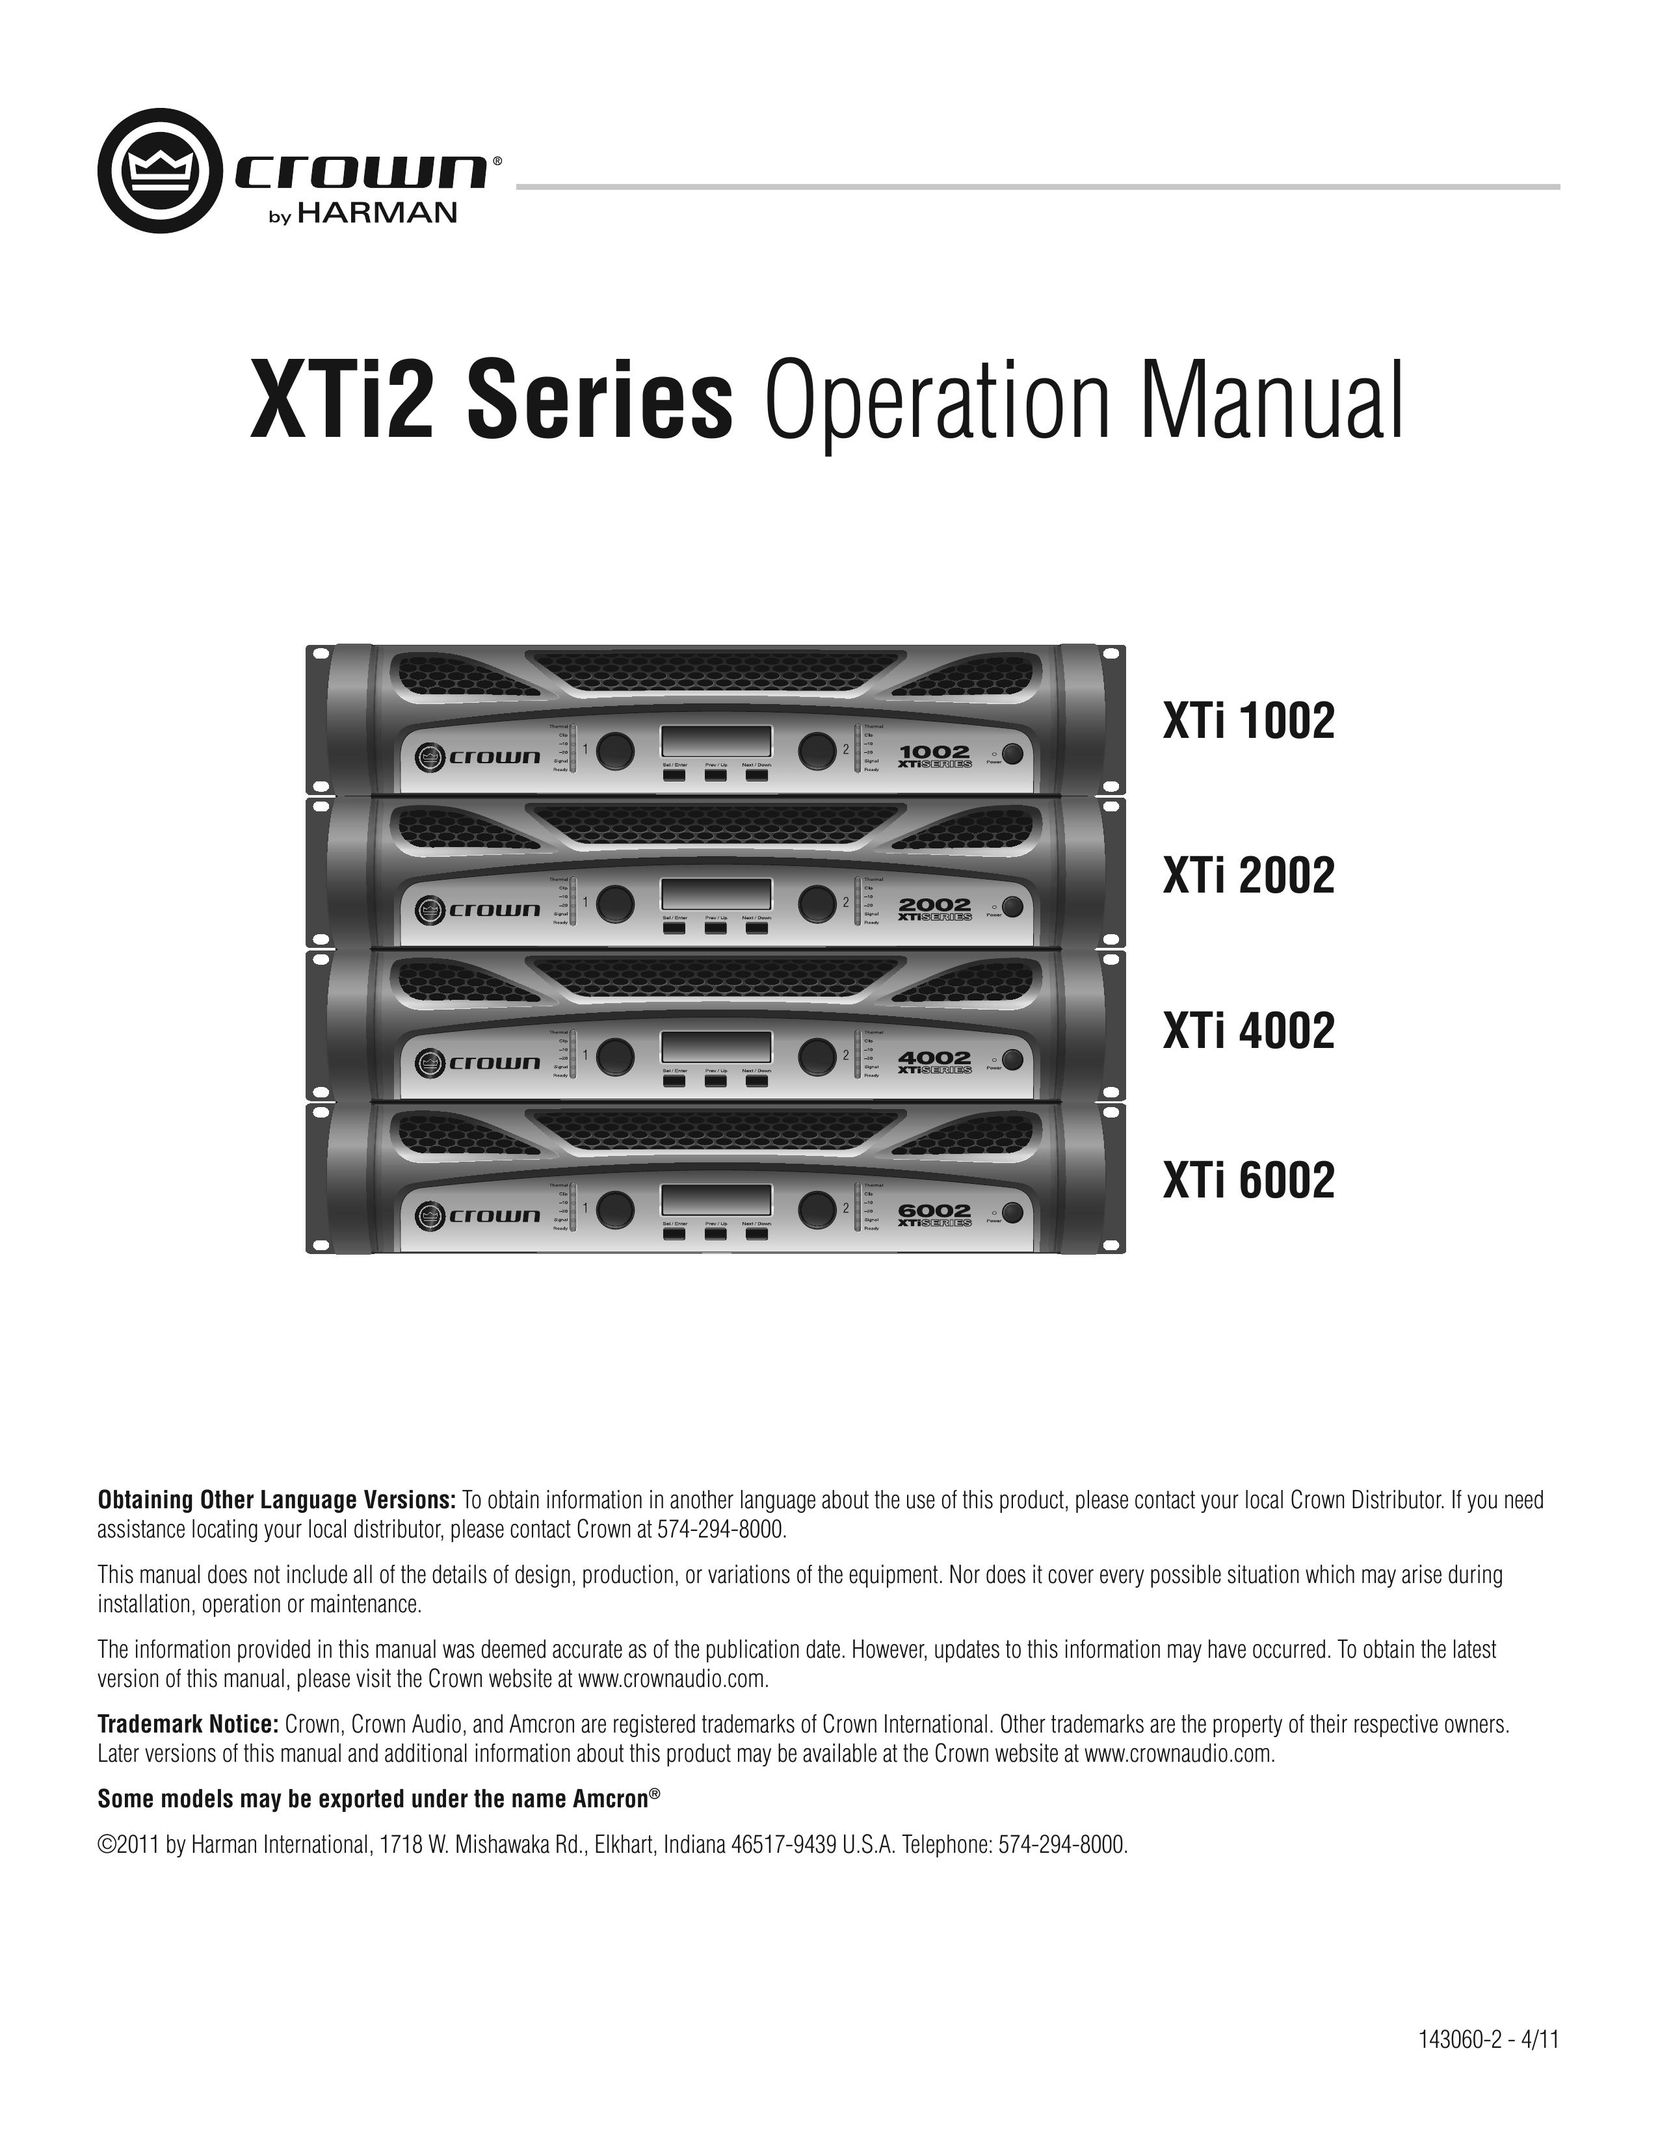 Crown XTI 6002 Car Amplifier User Manual